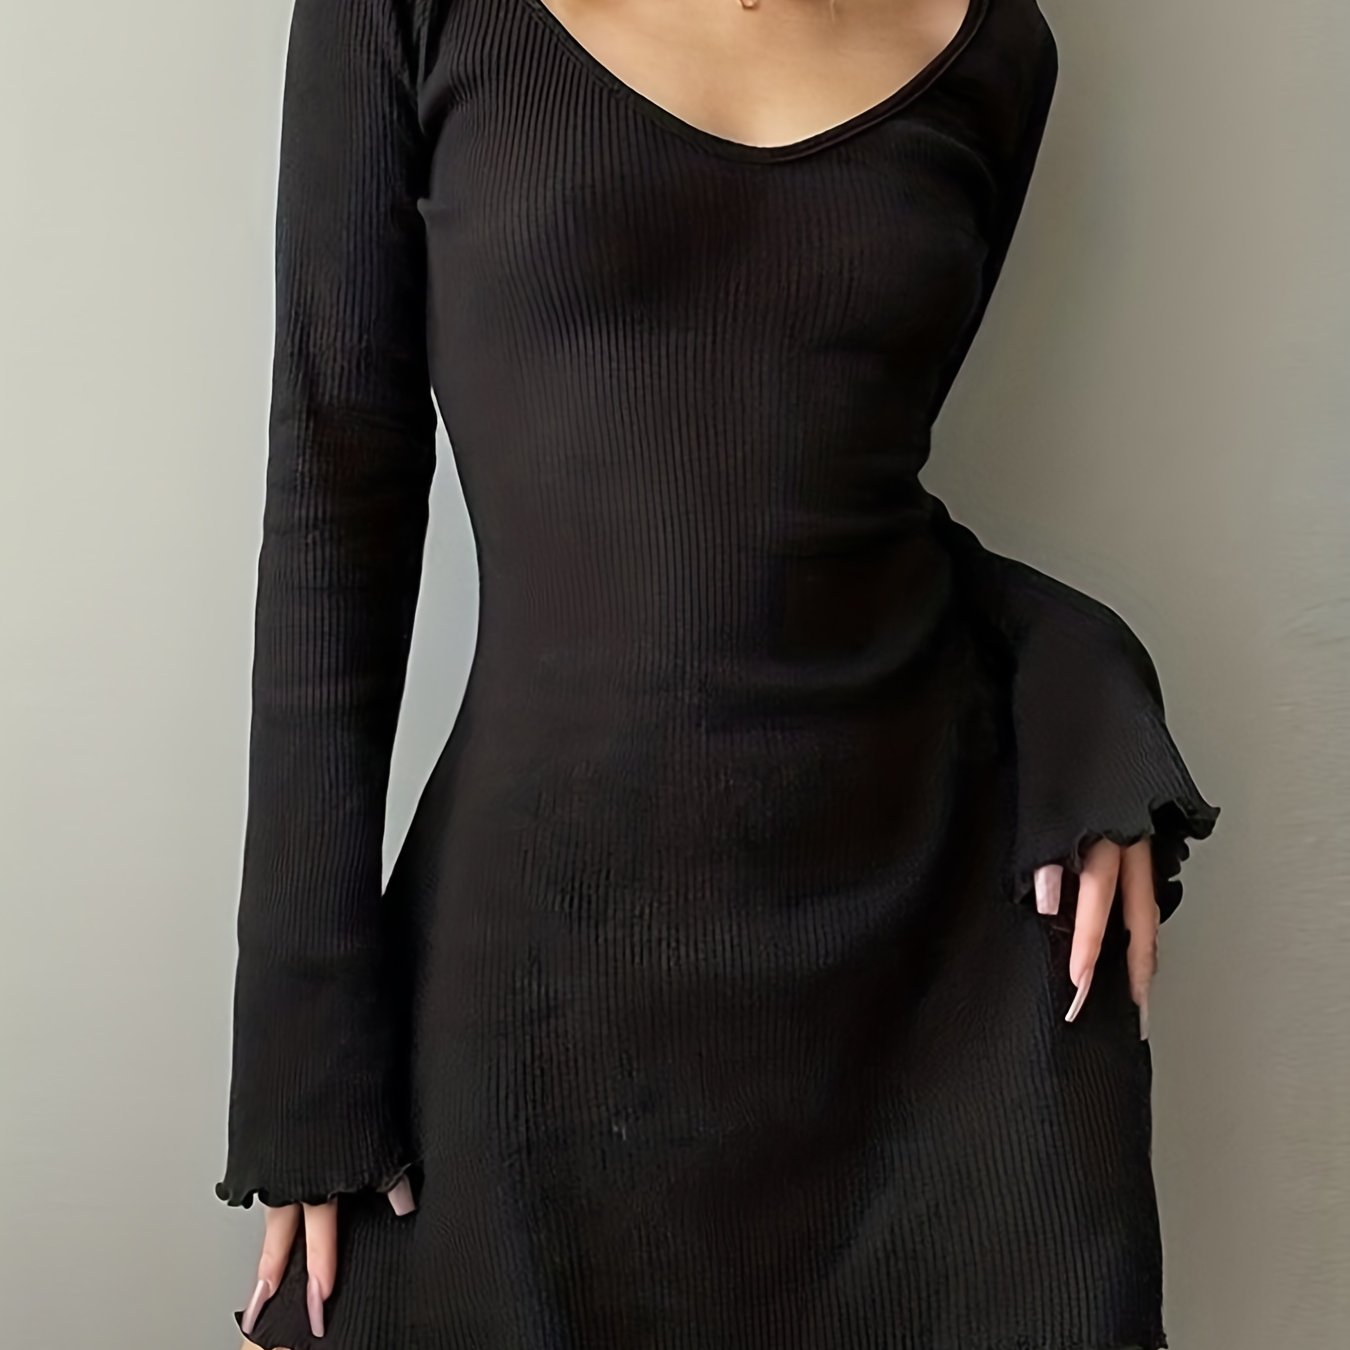 Antmvs Lettuce Trim Solid Dress, Elegant Crew Neck Long Sleeve Dress, Women's Clothing